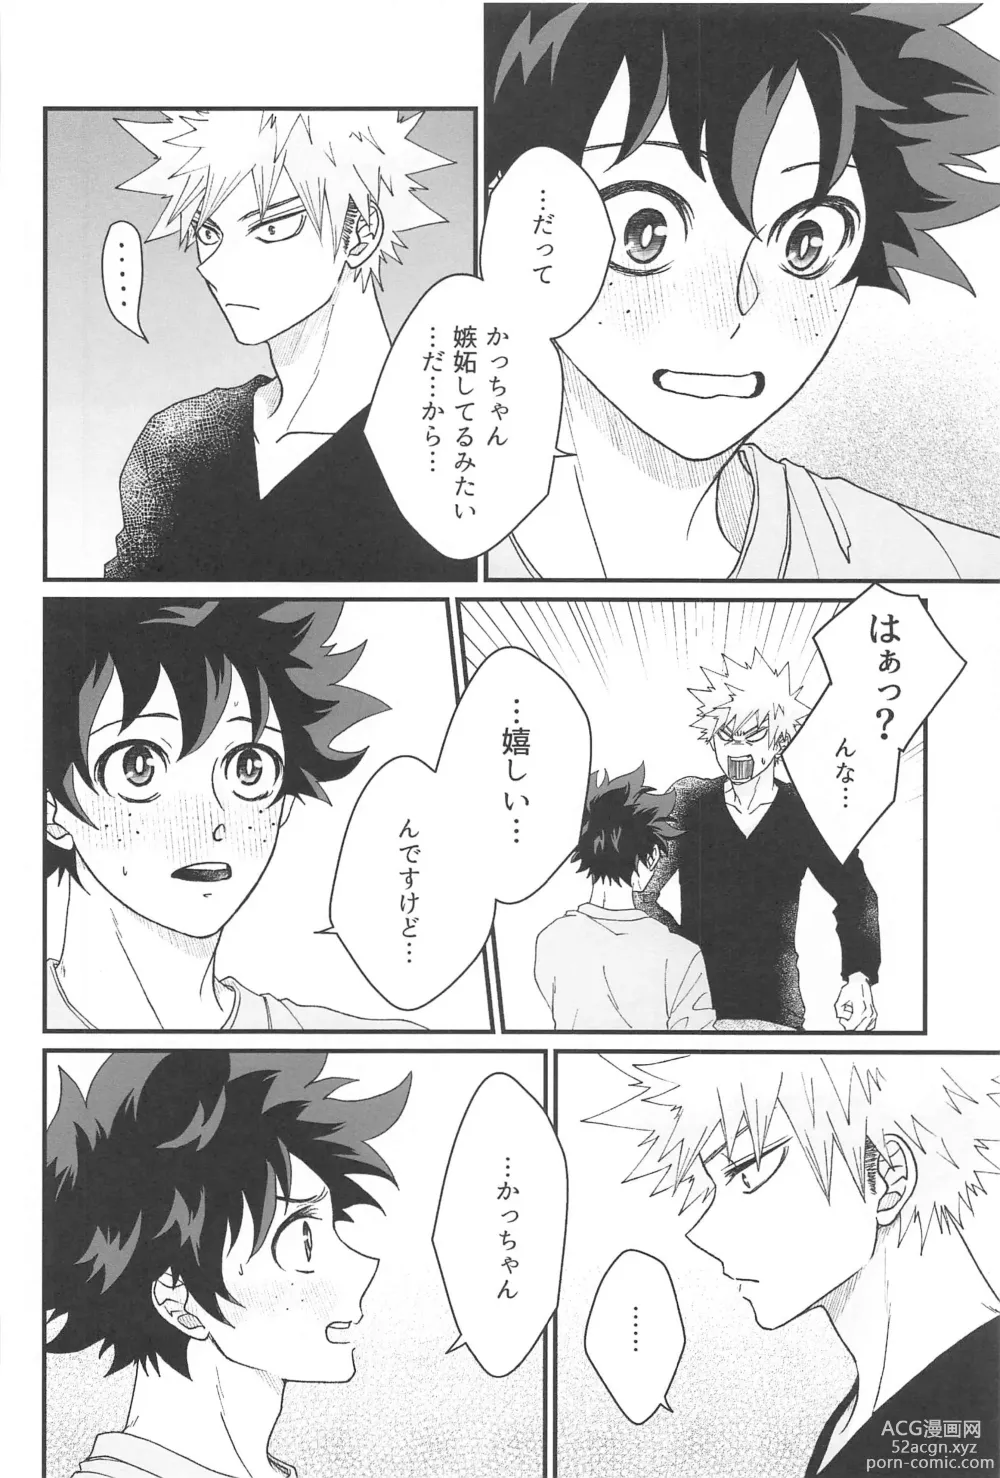 Page 13 of doujinshi 0.01